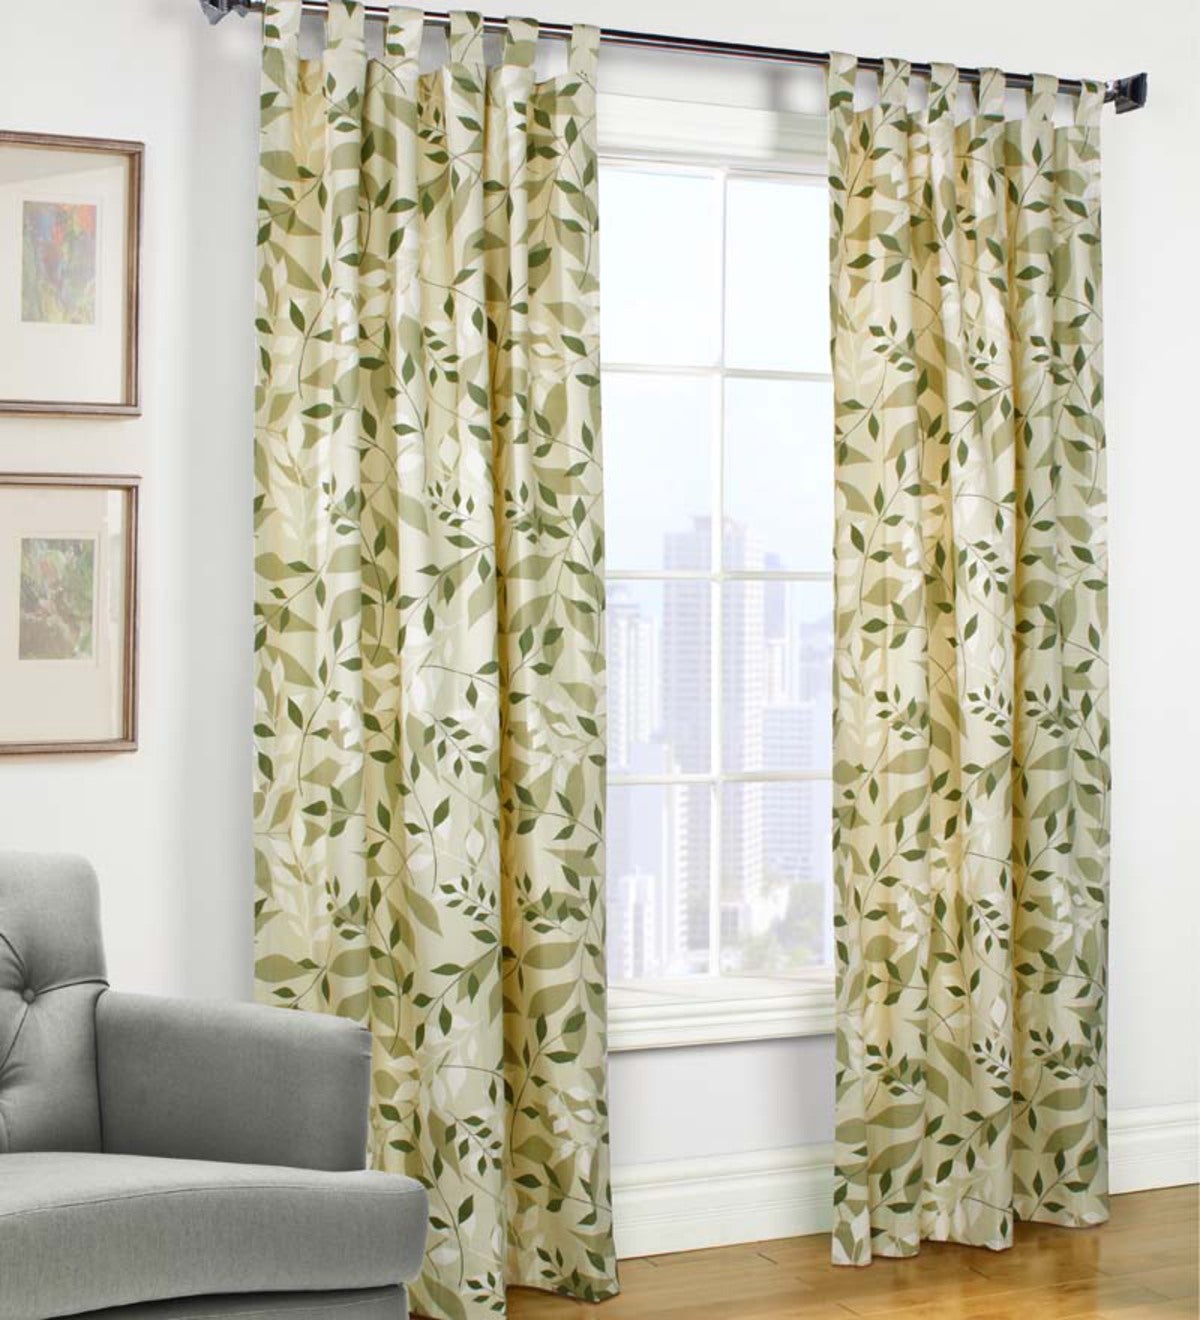 Leaves Tab-Top Curtains, 95"L x 40"W